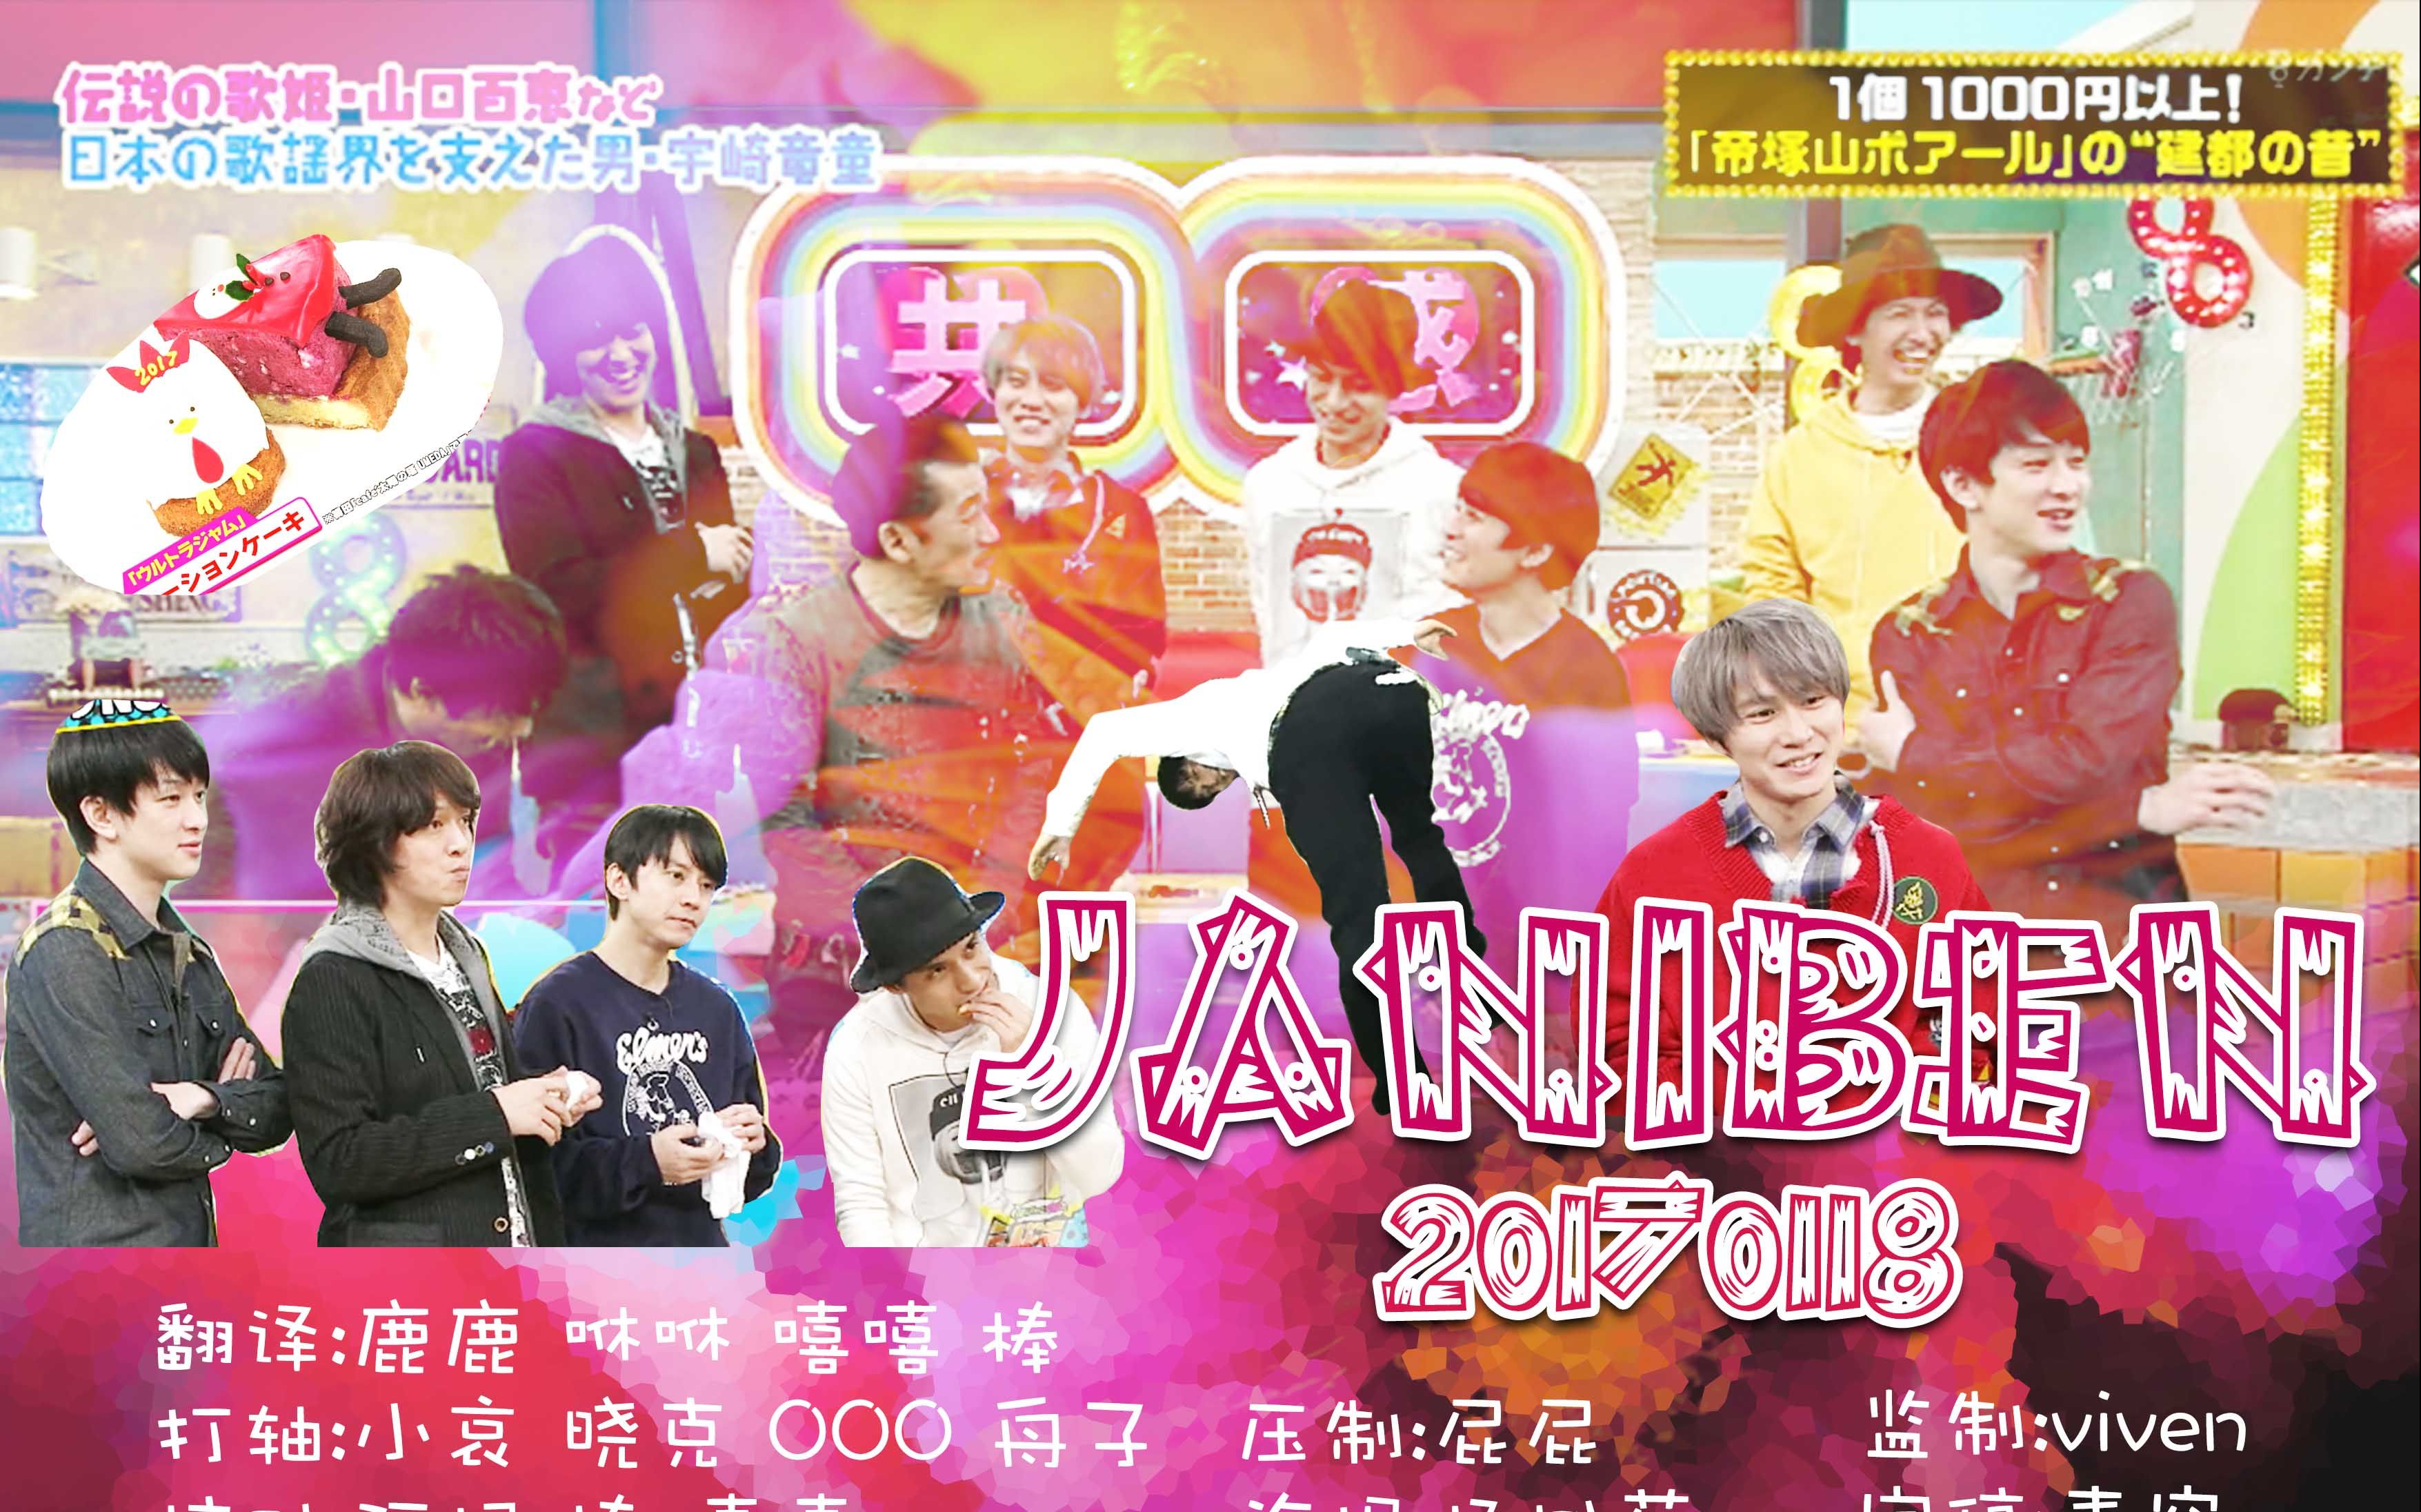 KANJANI LIVE TOUR!! 8EST 2013 720p BluRay x264 AAC-VividSul